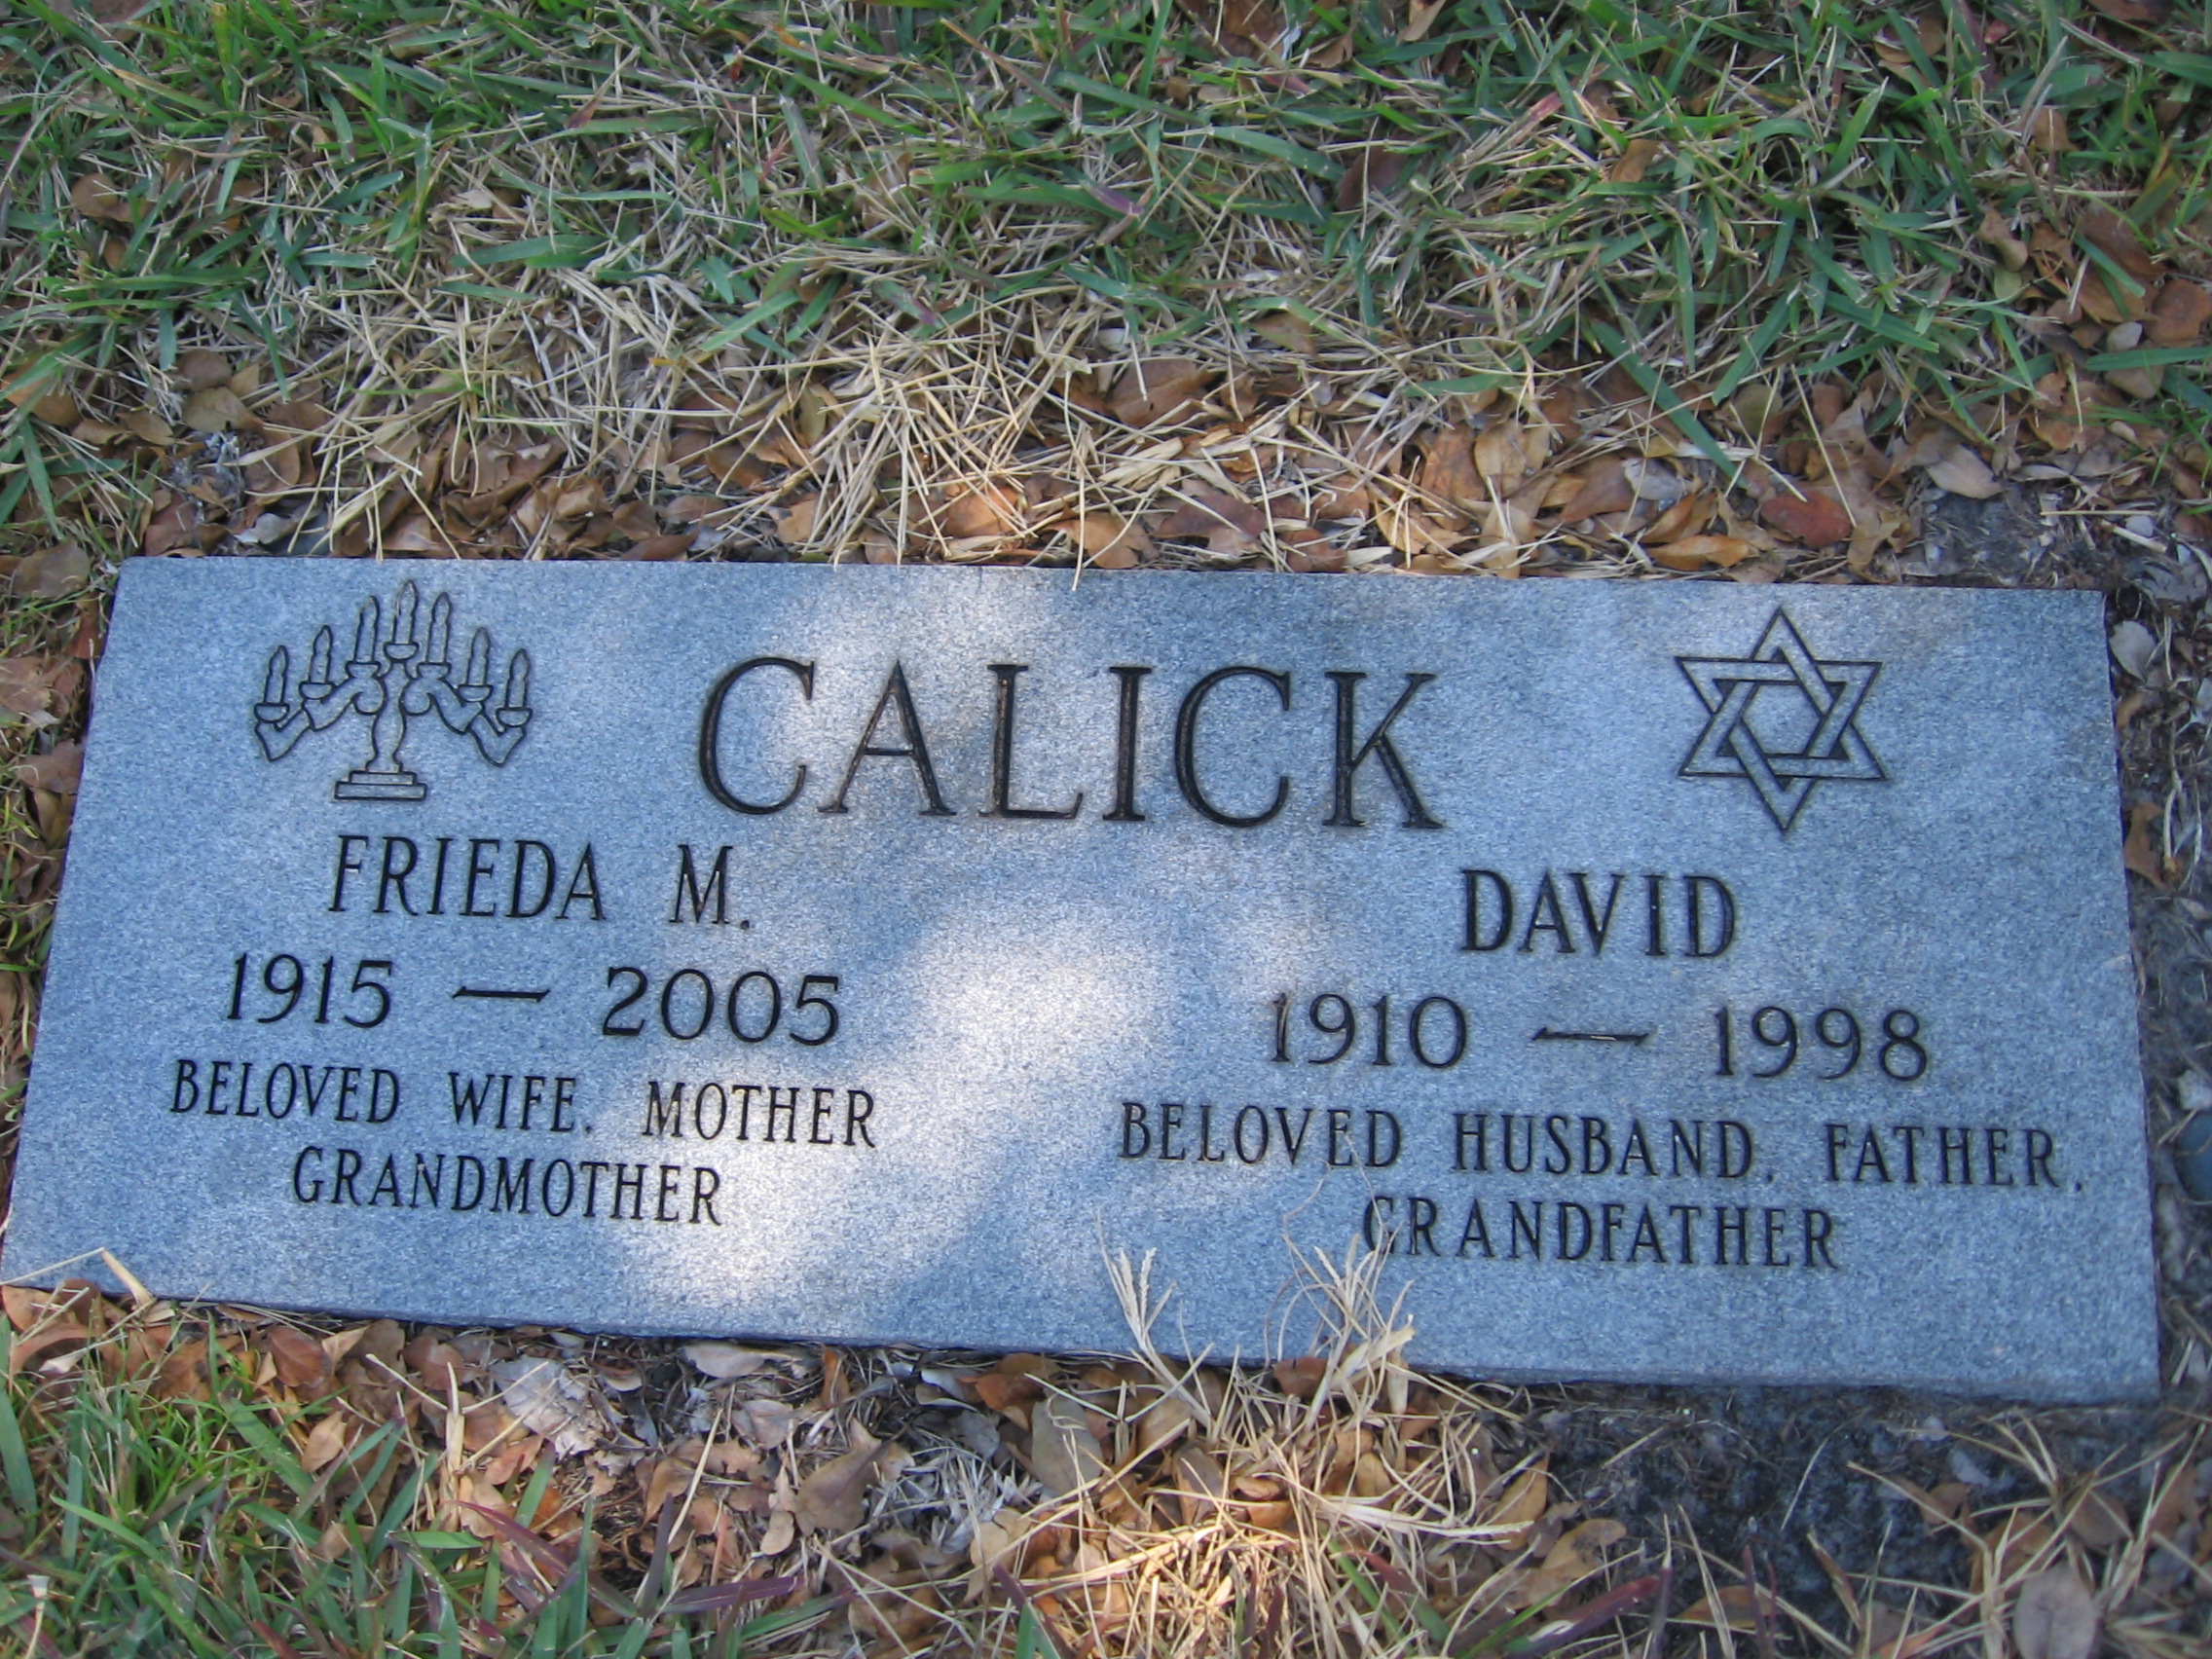 David Calick